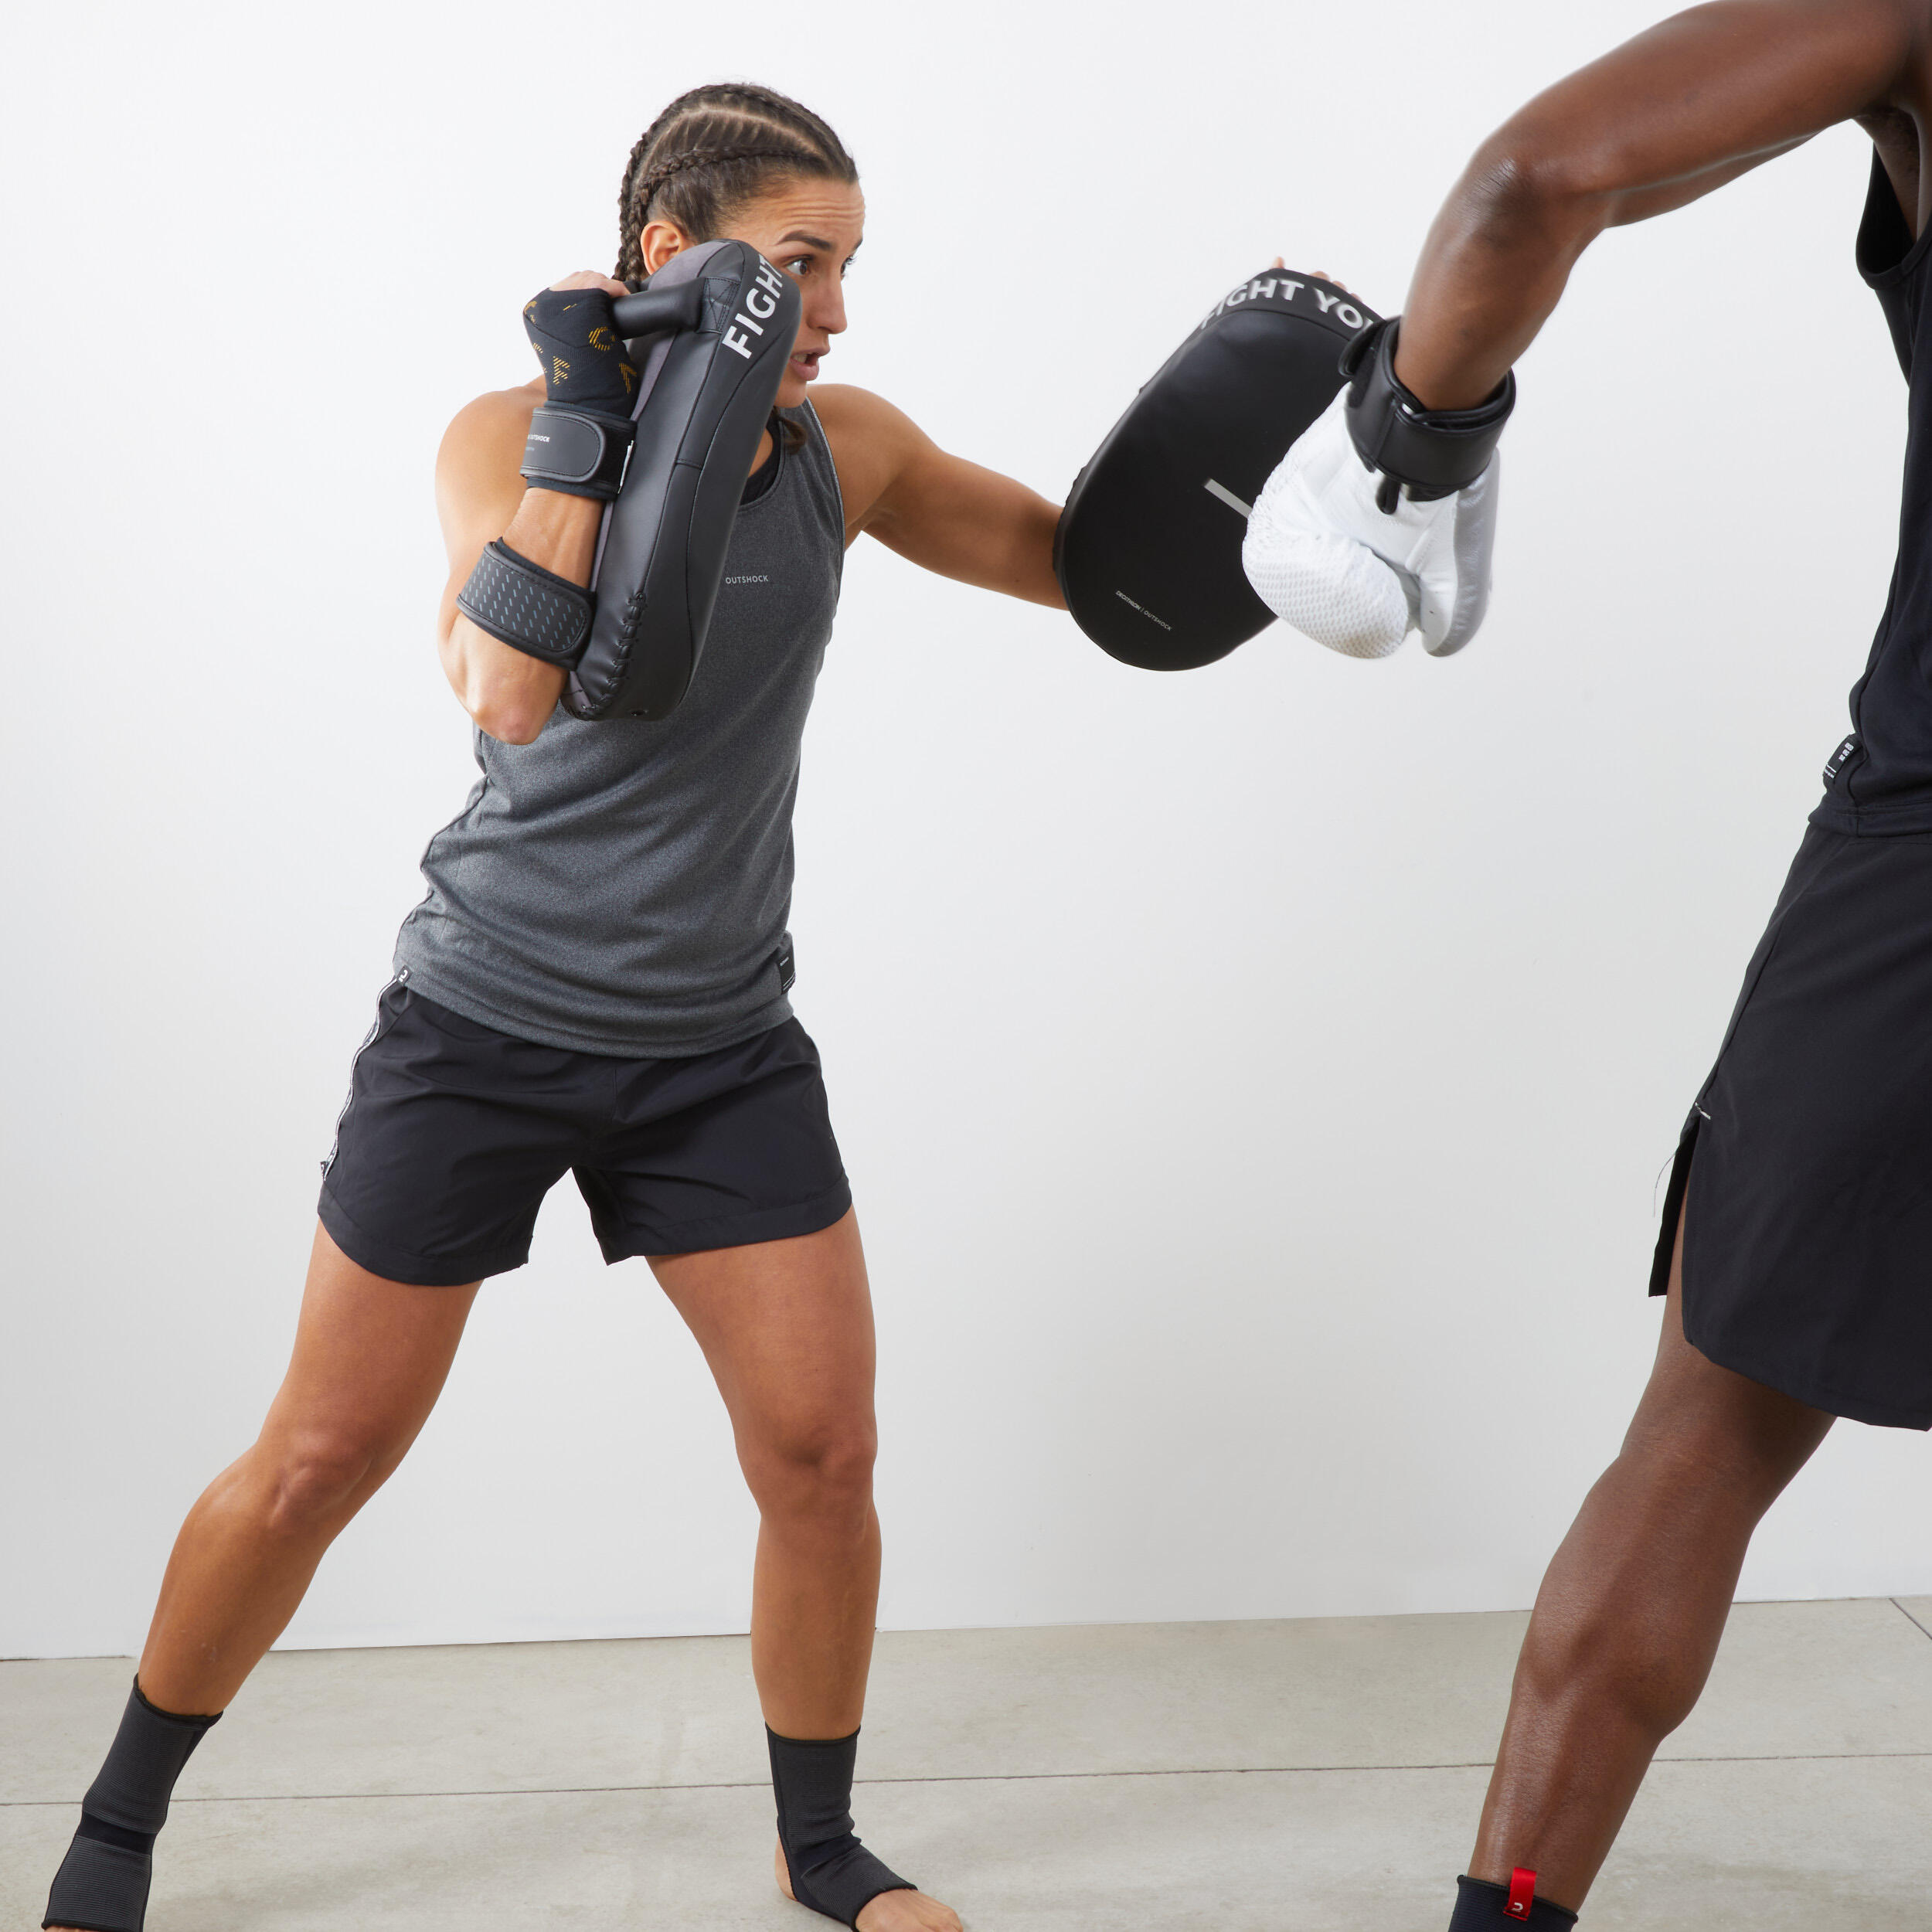 Buy Boxing Gloves Decathlon online | Lazada.com.ph